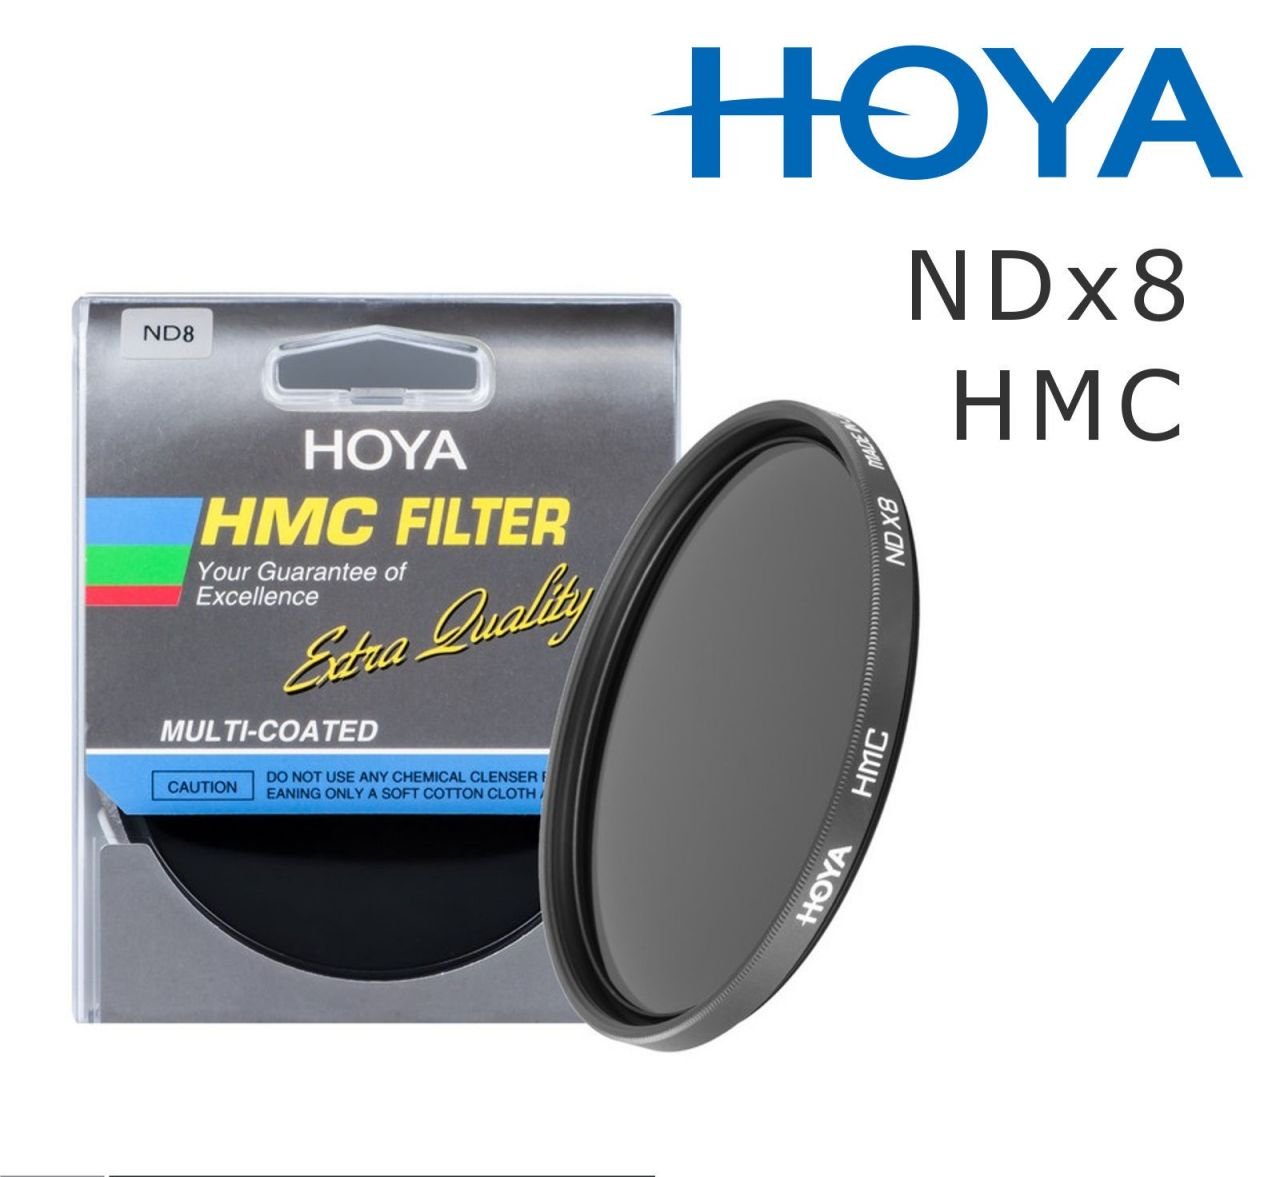 Hoya 43mm HMC NDX 8 Filtre 3 Stop